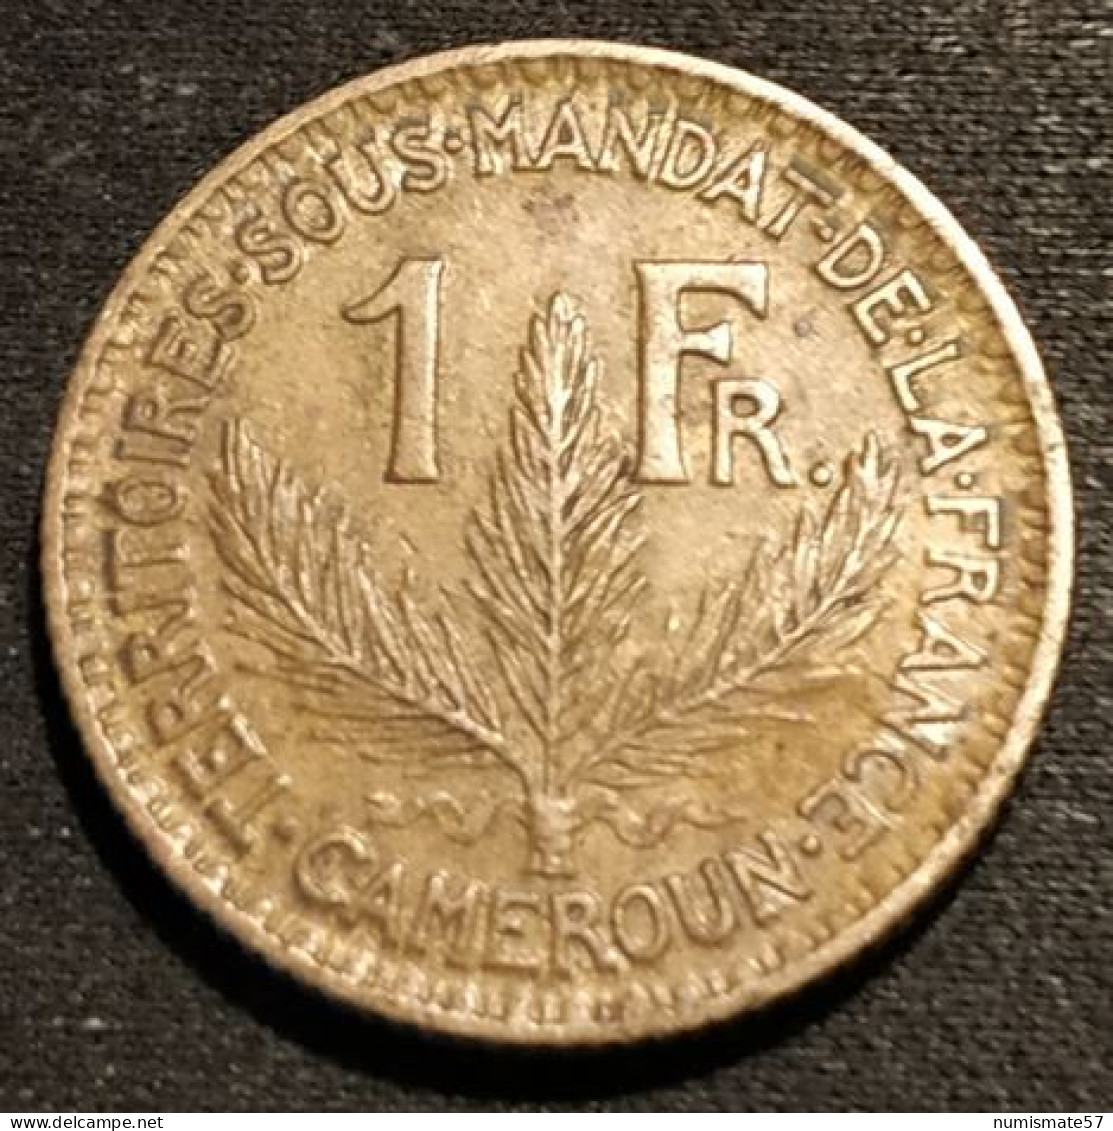 RARE - CAMEROUN - 1 FRANC 1926 - KM 2 - TERRITOIRES SOUS MANDAT DE LA FRANCE - Kamerun